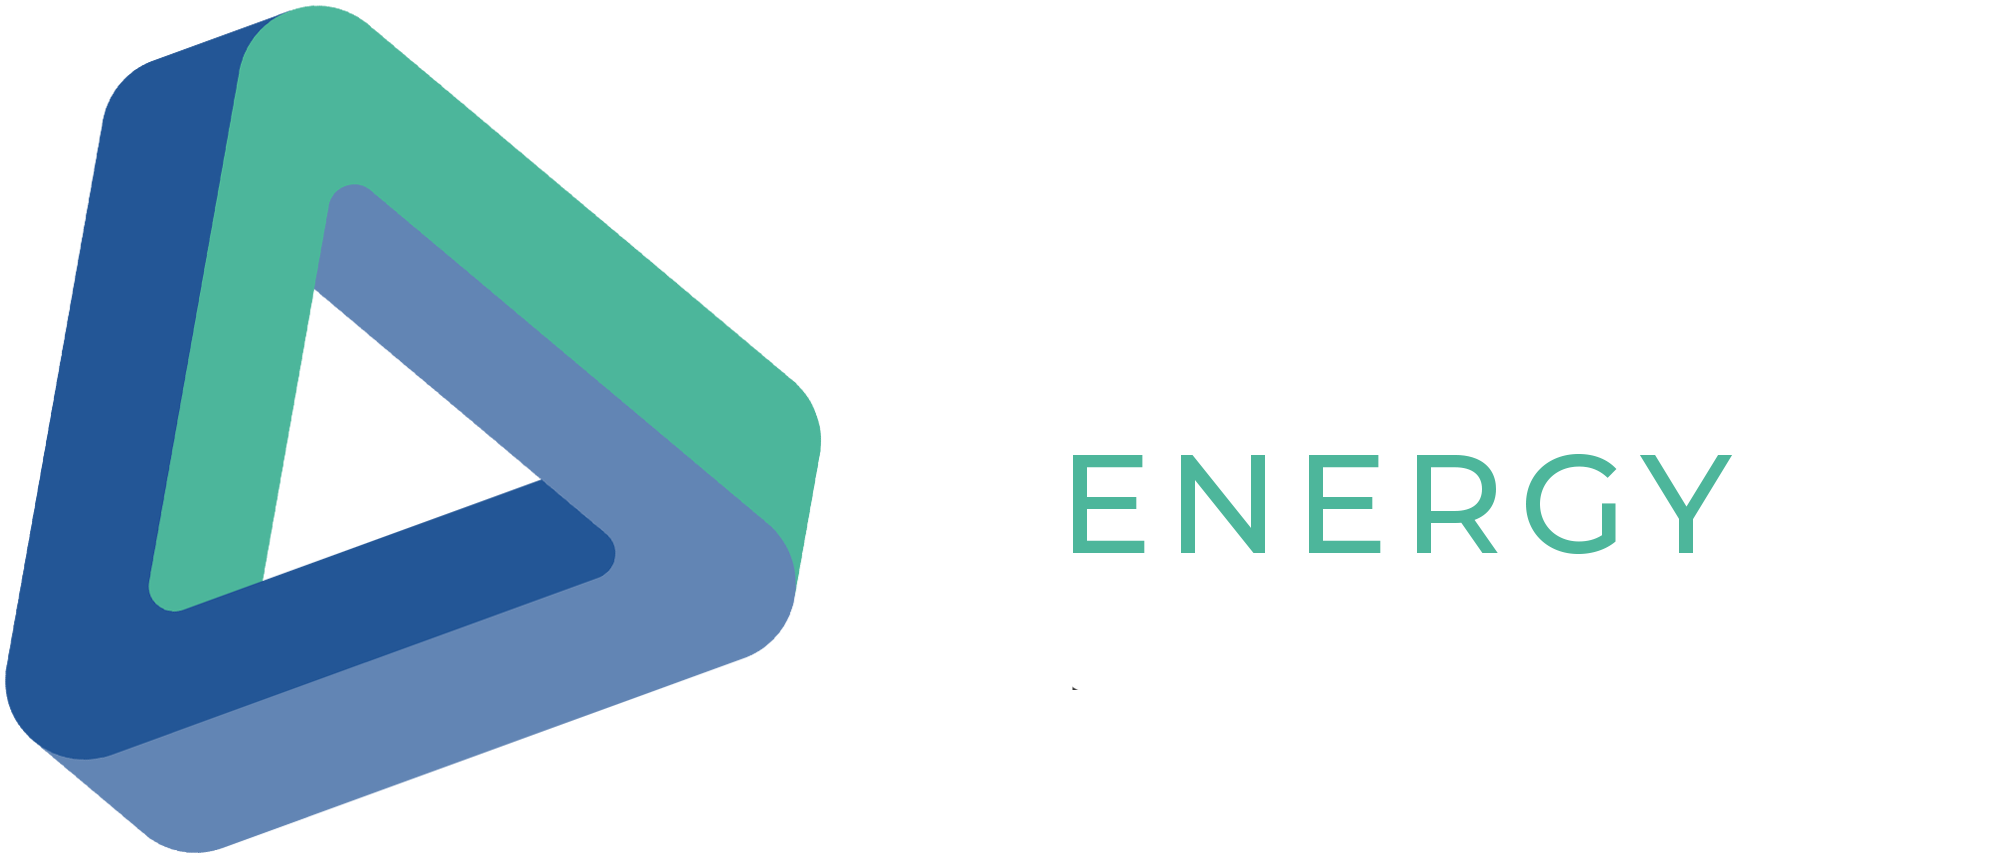 image of icd logo